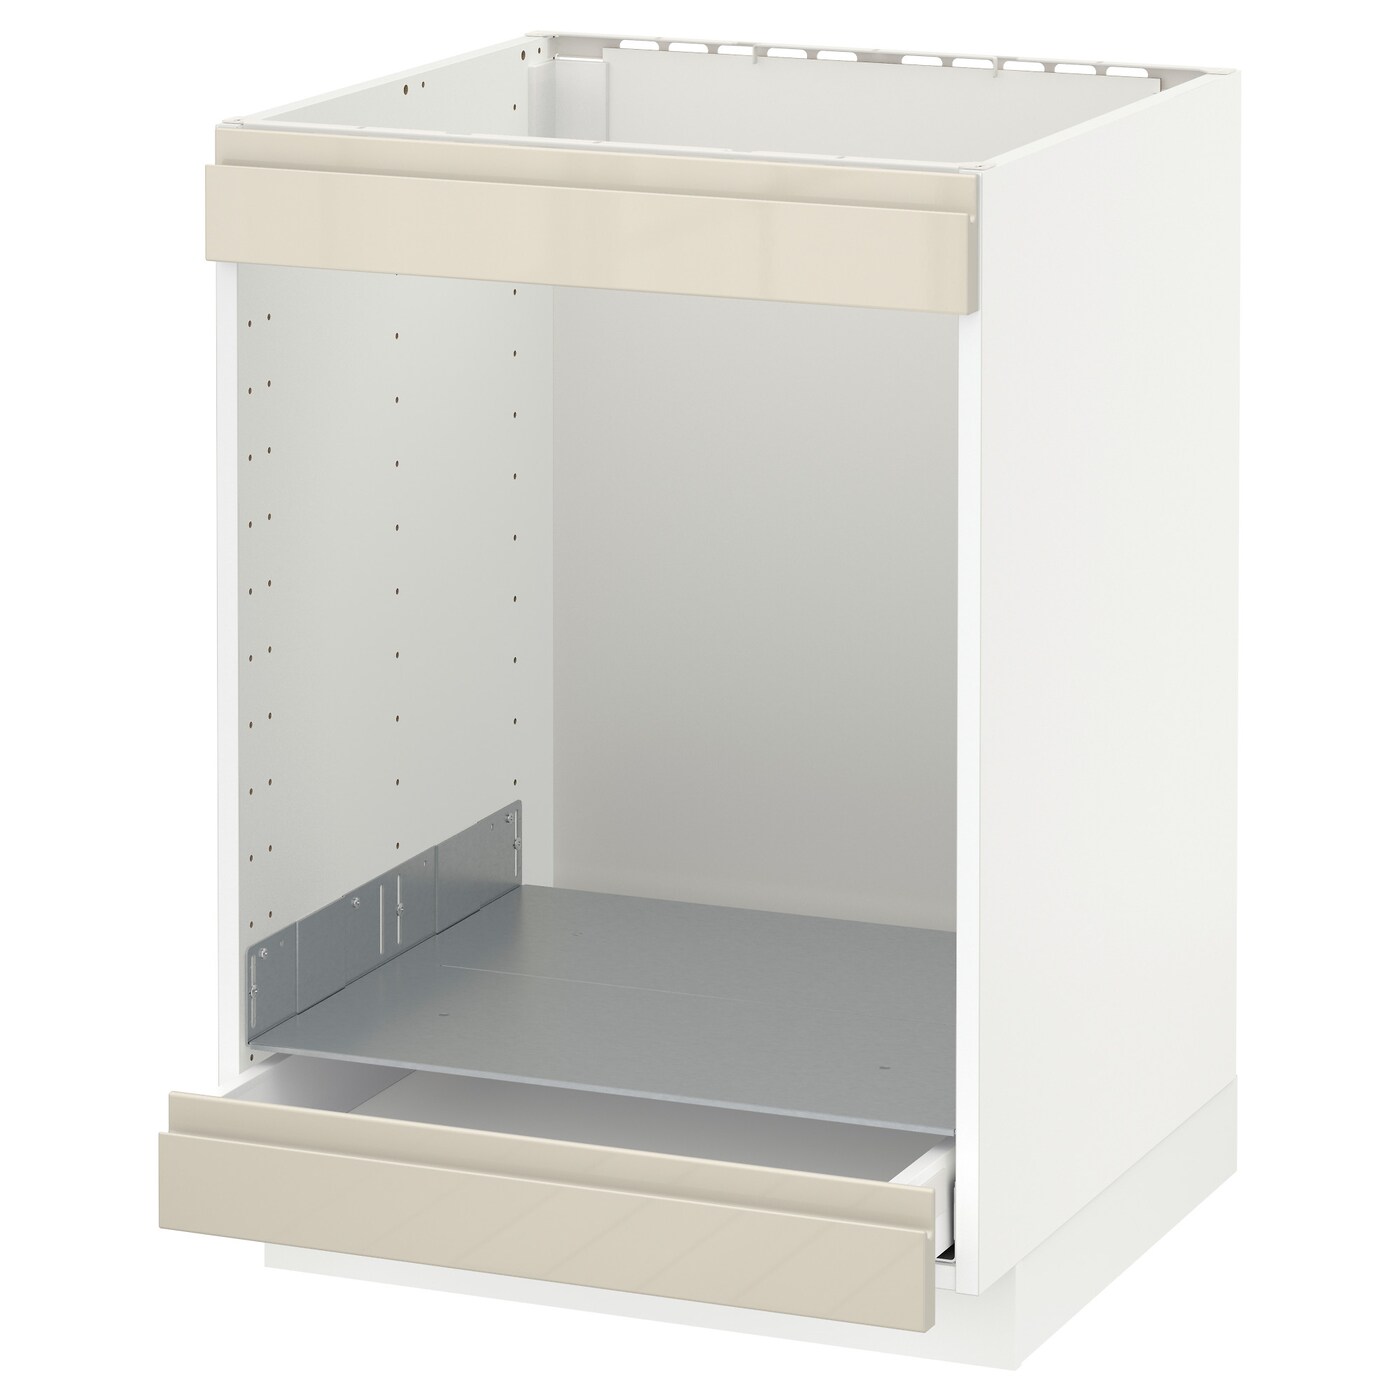 Шкаф - METOD / MAXIMERA IKEA/ МЕТОД/ МАКСИМЕРА ИКЕА,  88х60 см, белый/светло-бежевый